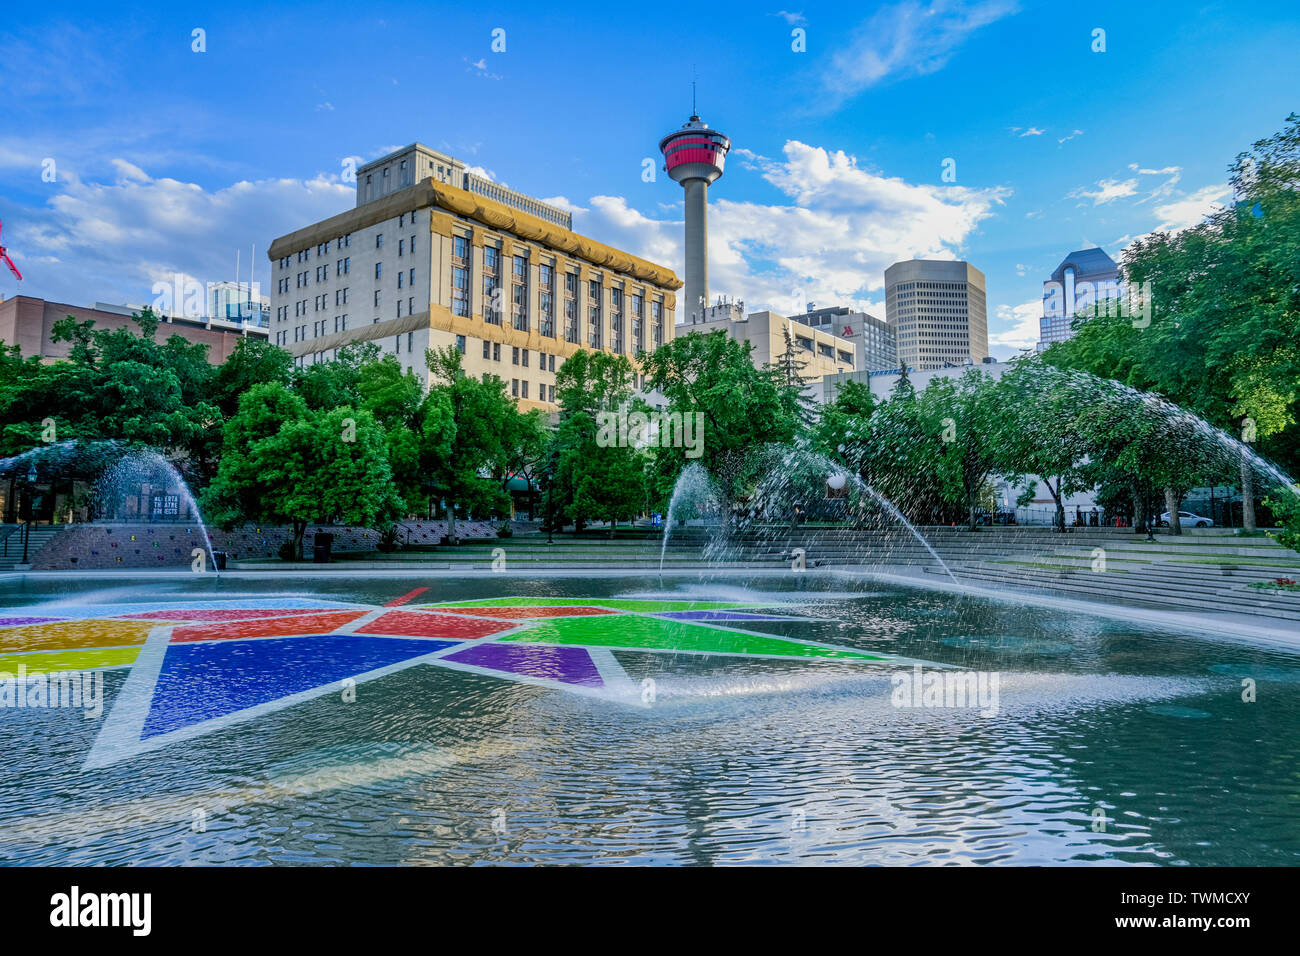 L'Olympic Plaza, Calgary, Alberta, Canada Banque D'Images